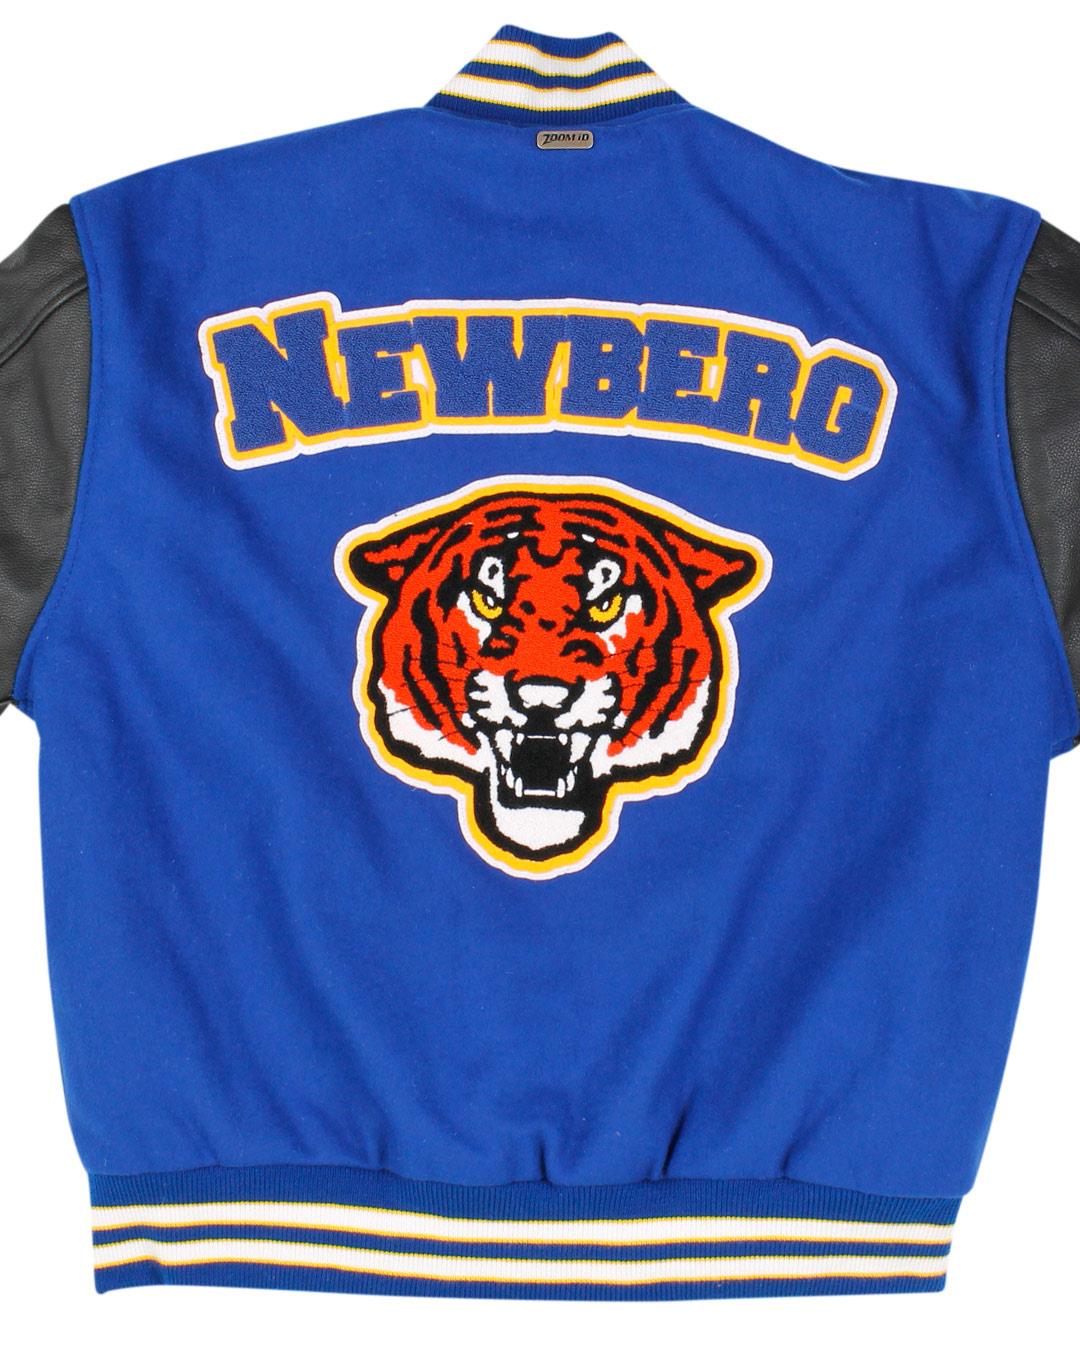 Newberg High School Letterman Jacket, Newberg OR - Back